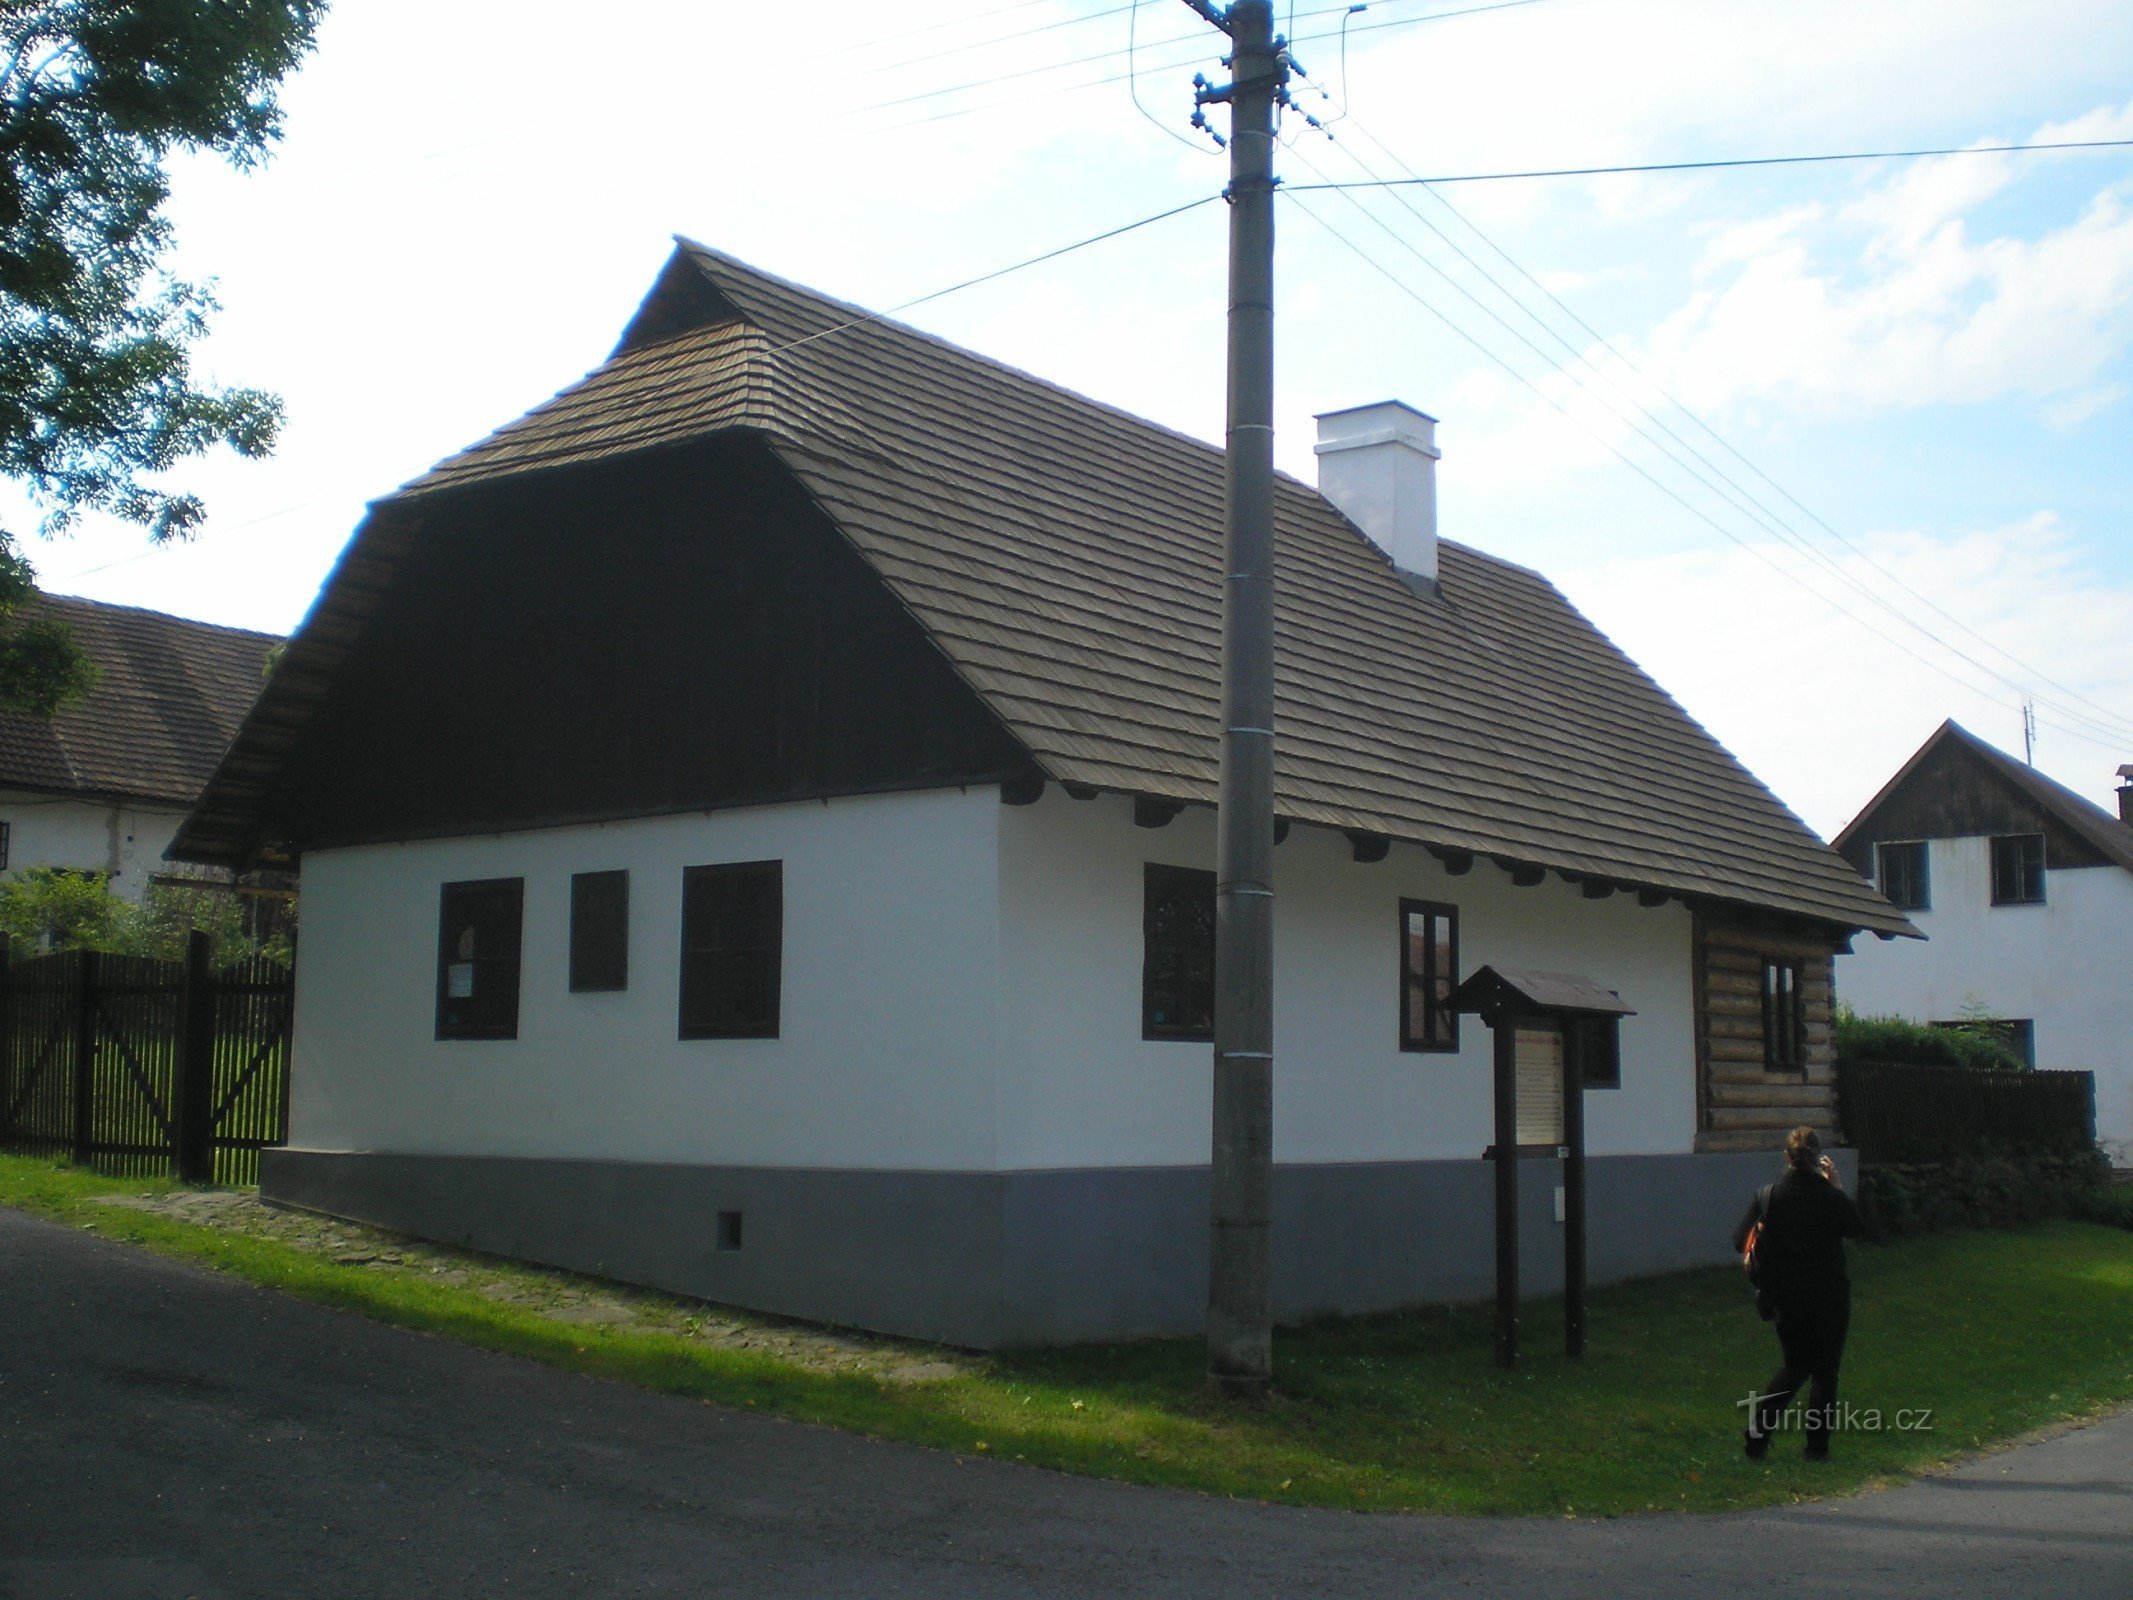 De geboorteplaats van František Křižík